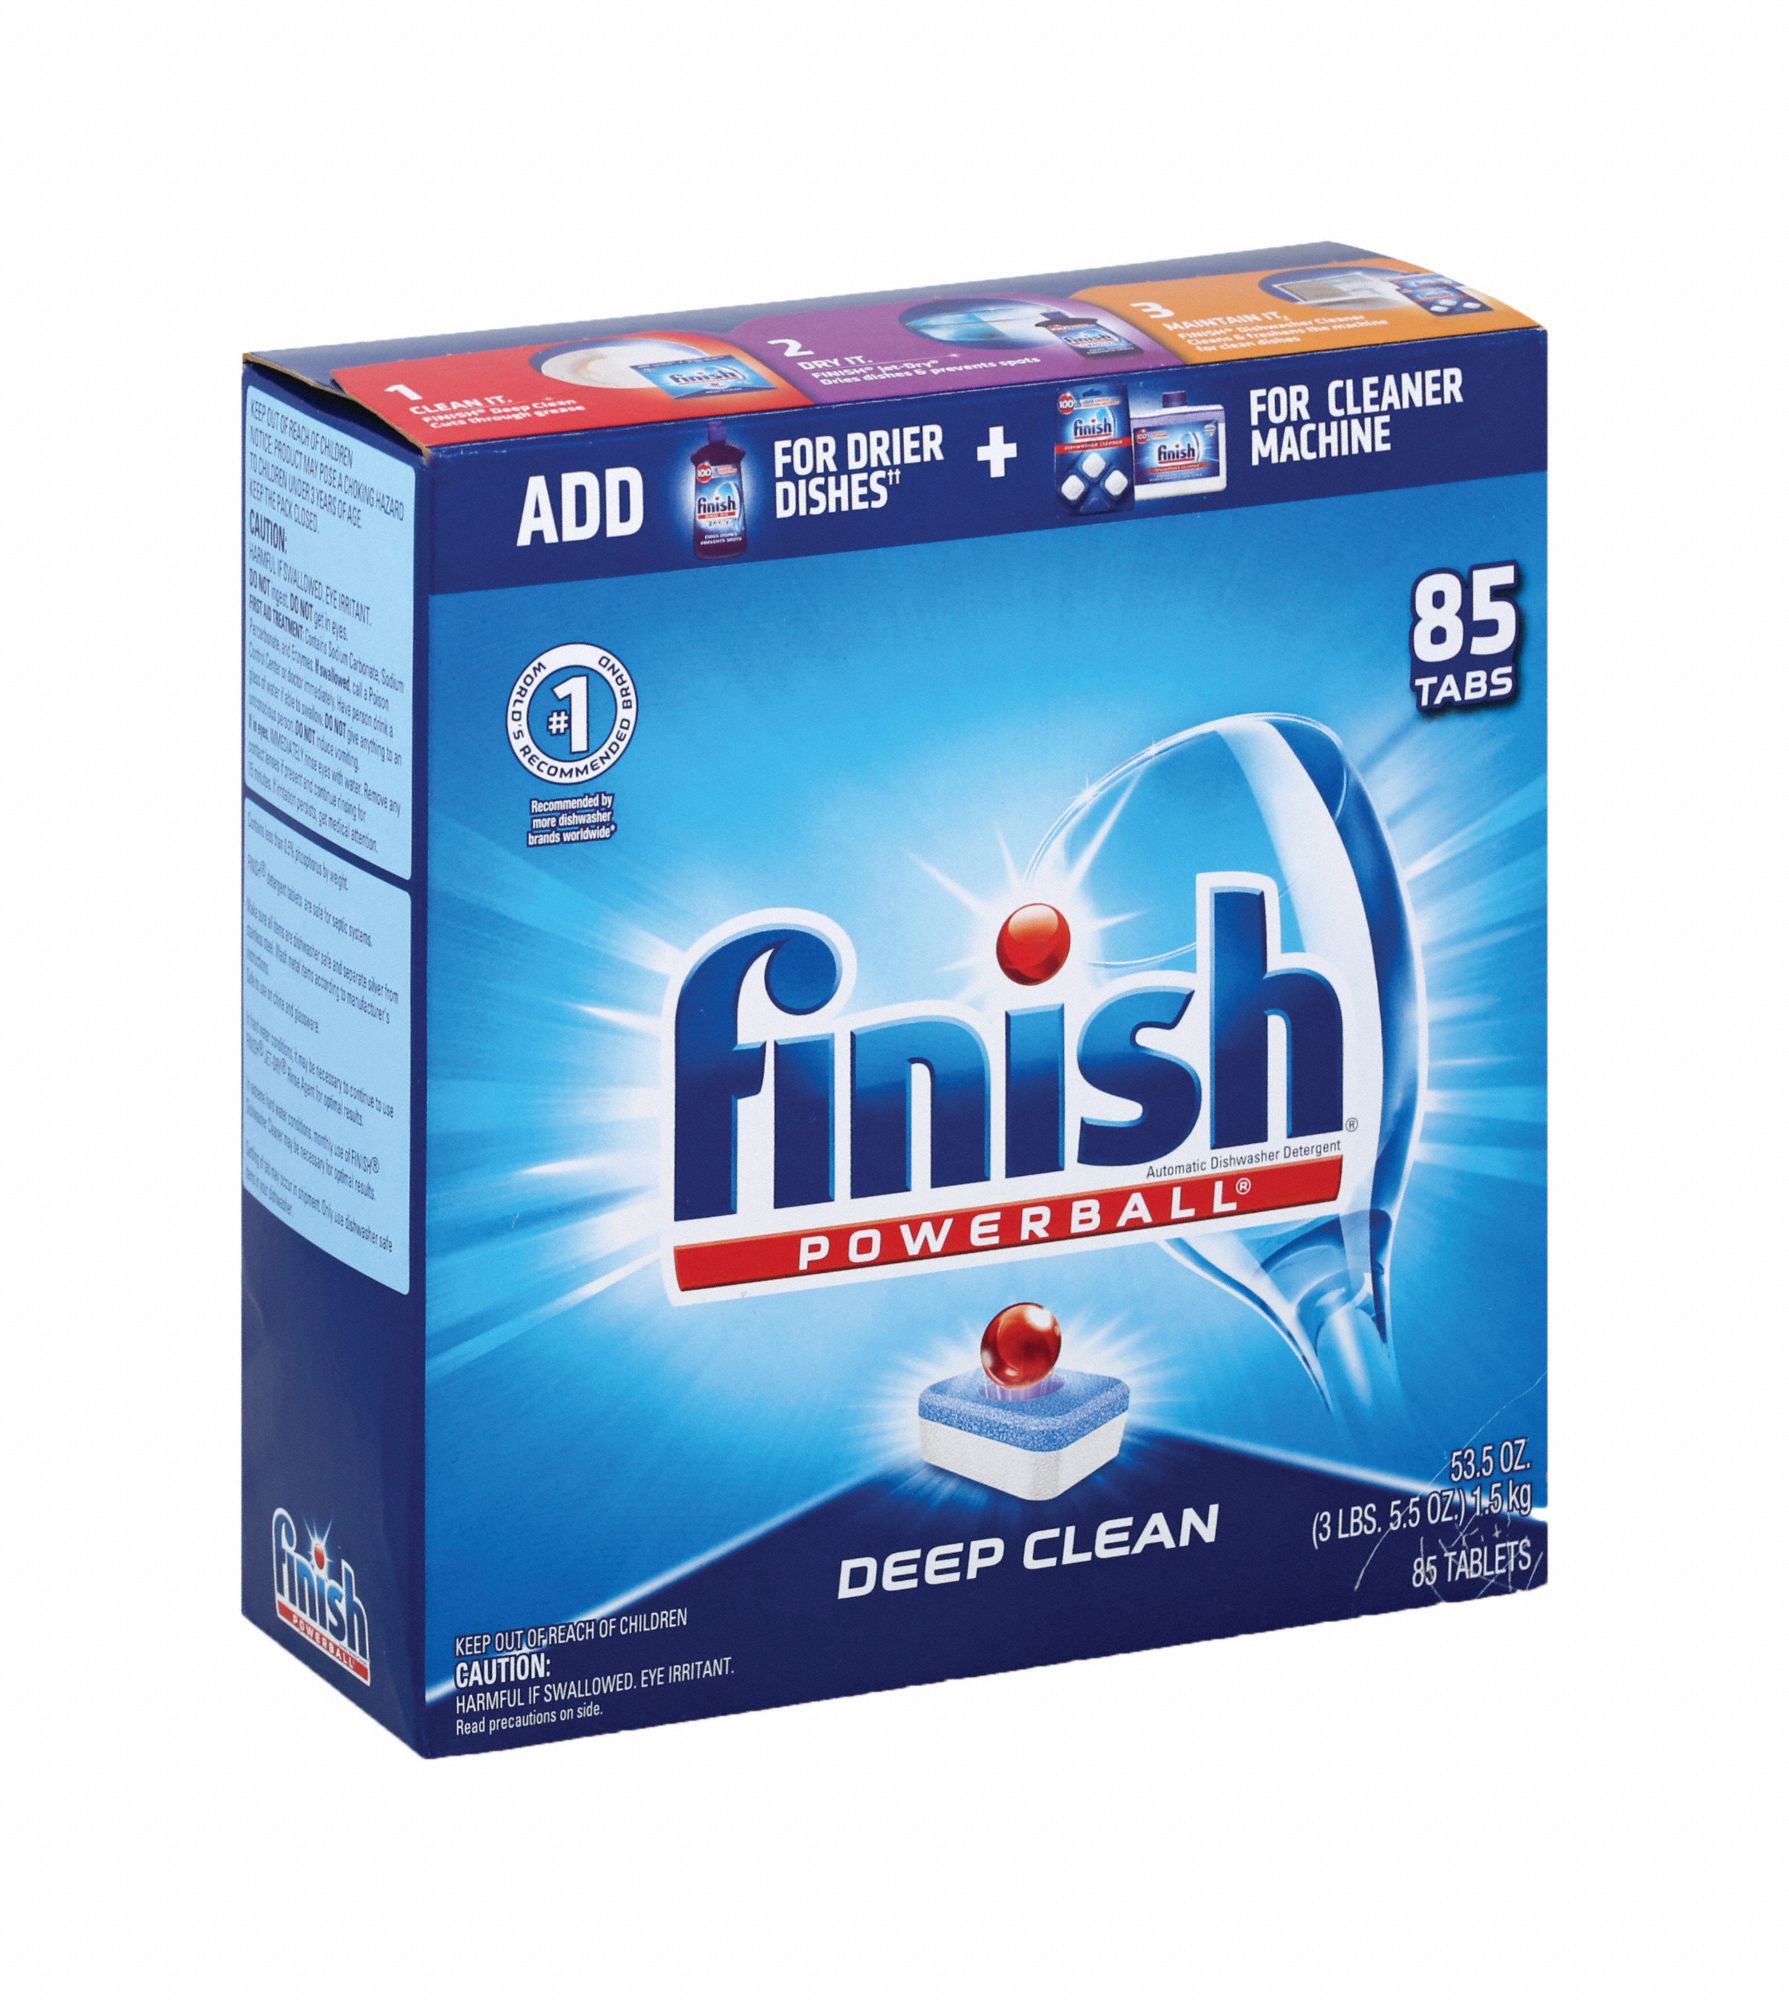 Dishwasher Detergent: Pacs, Box, 53.5 oz, Fresh, 4 PK